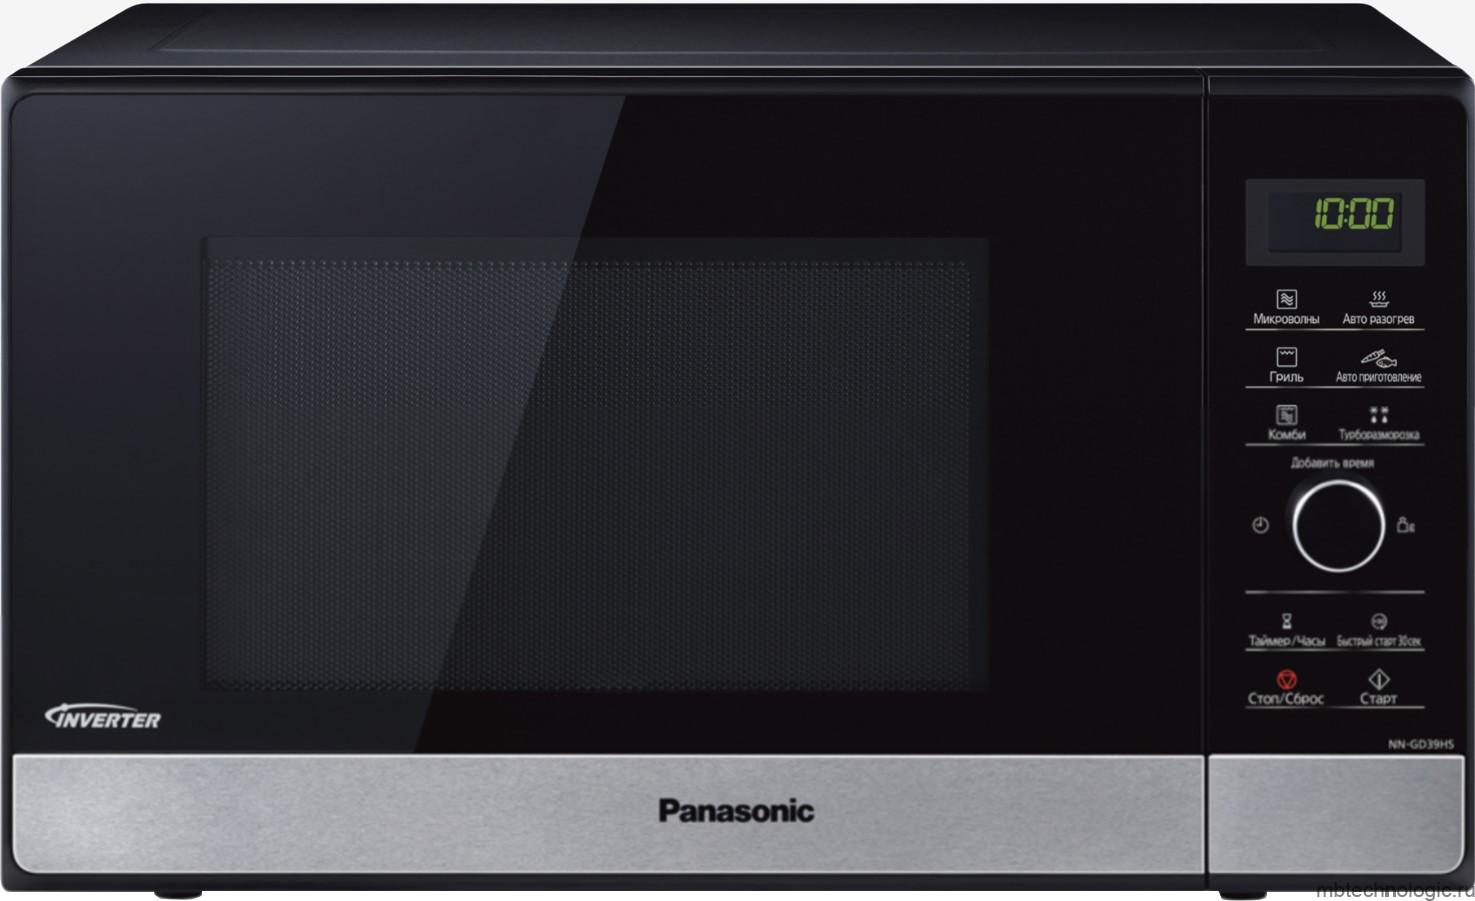 Panasonic NN-GD39HS